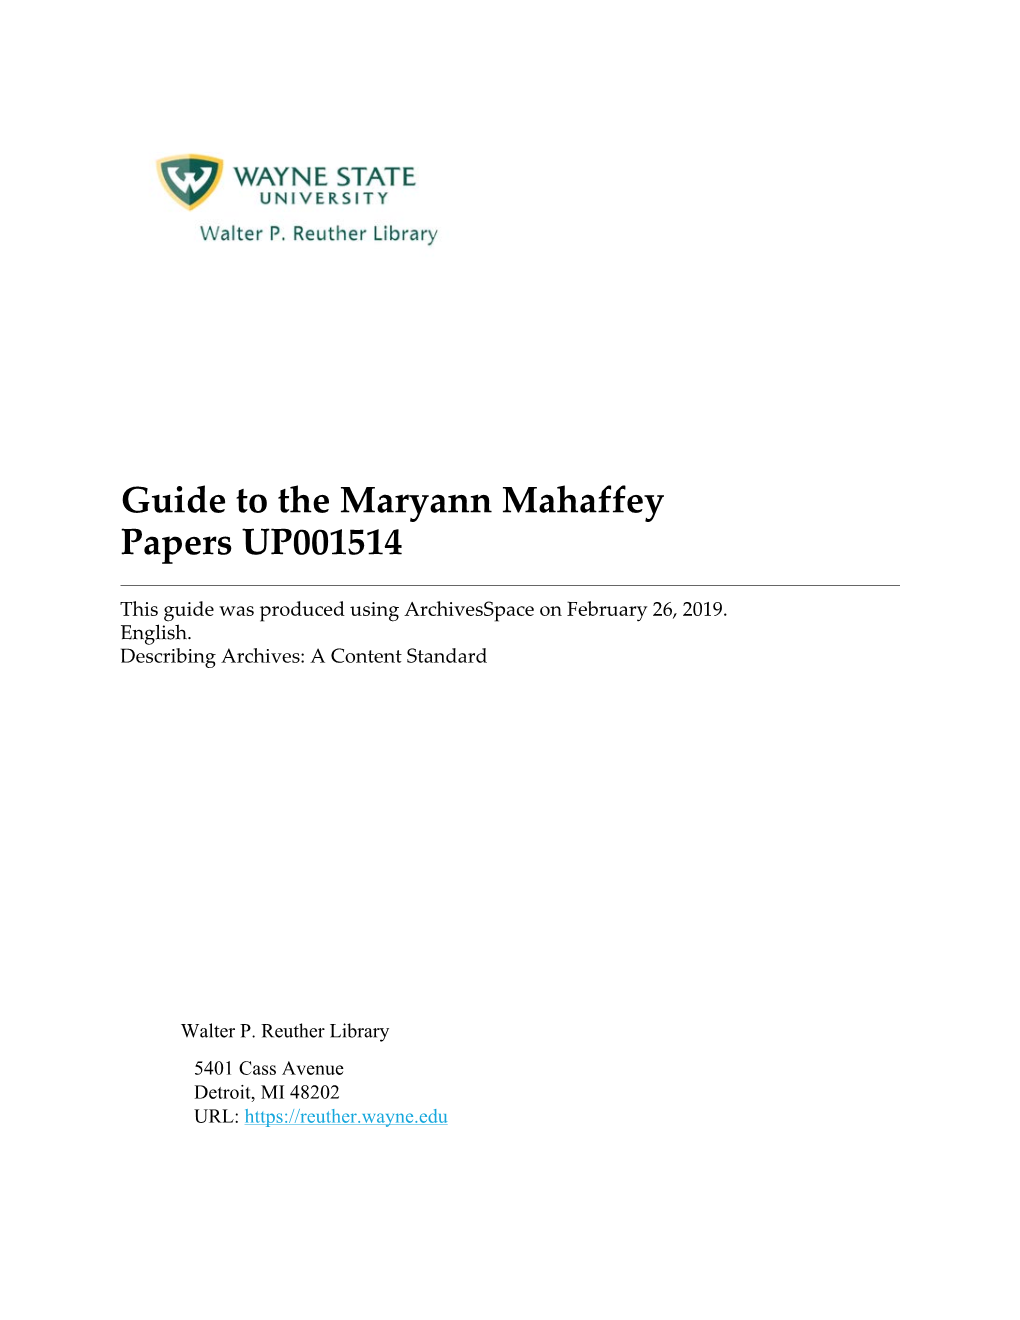 Maryann Mahaffey Papers UP001514